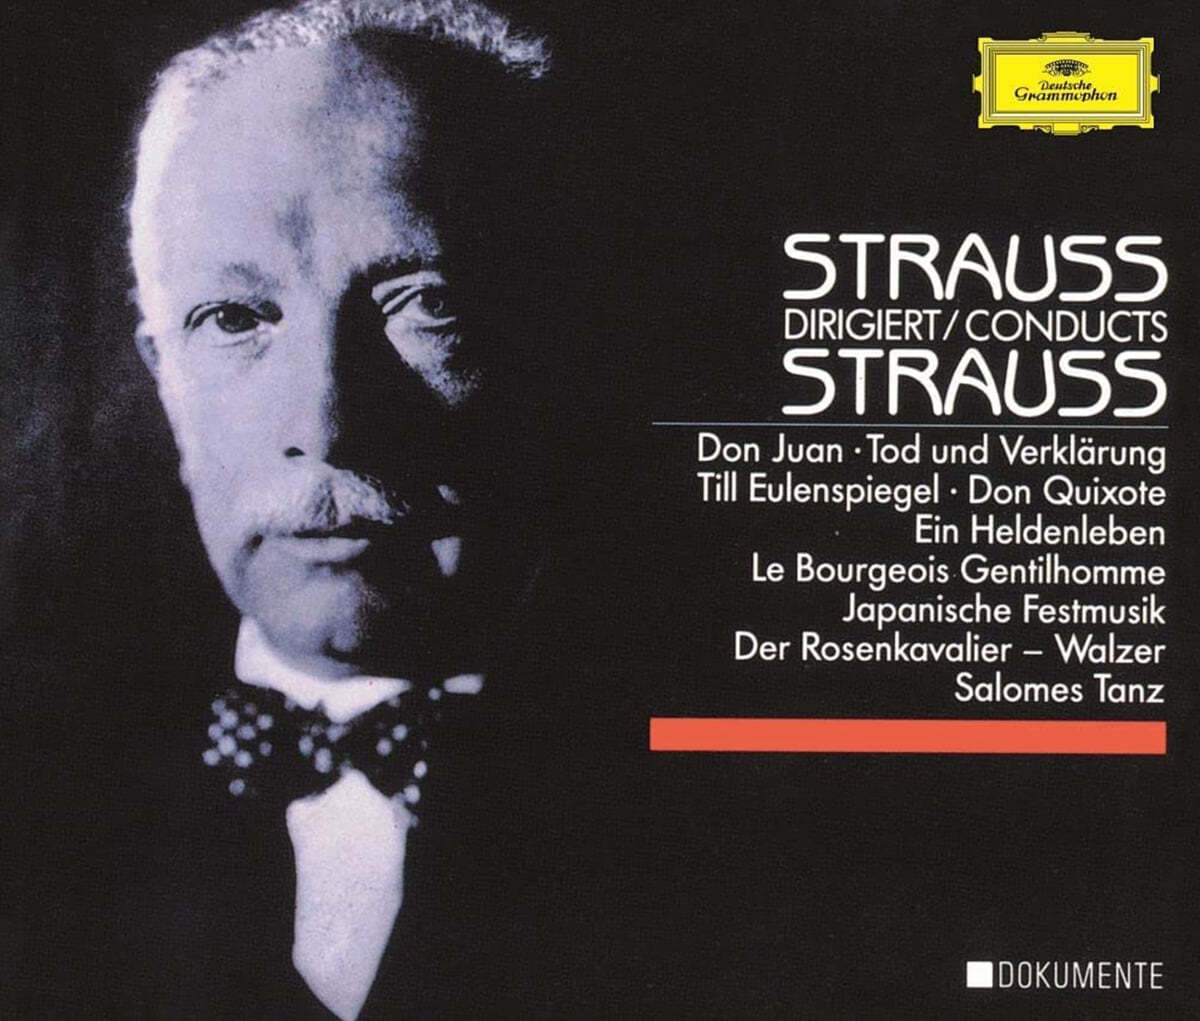 Richard Strauss 슈트라우스가 지휘한 슈트라우스 작품집 (Strauss Dirigiert Strauss)